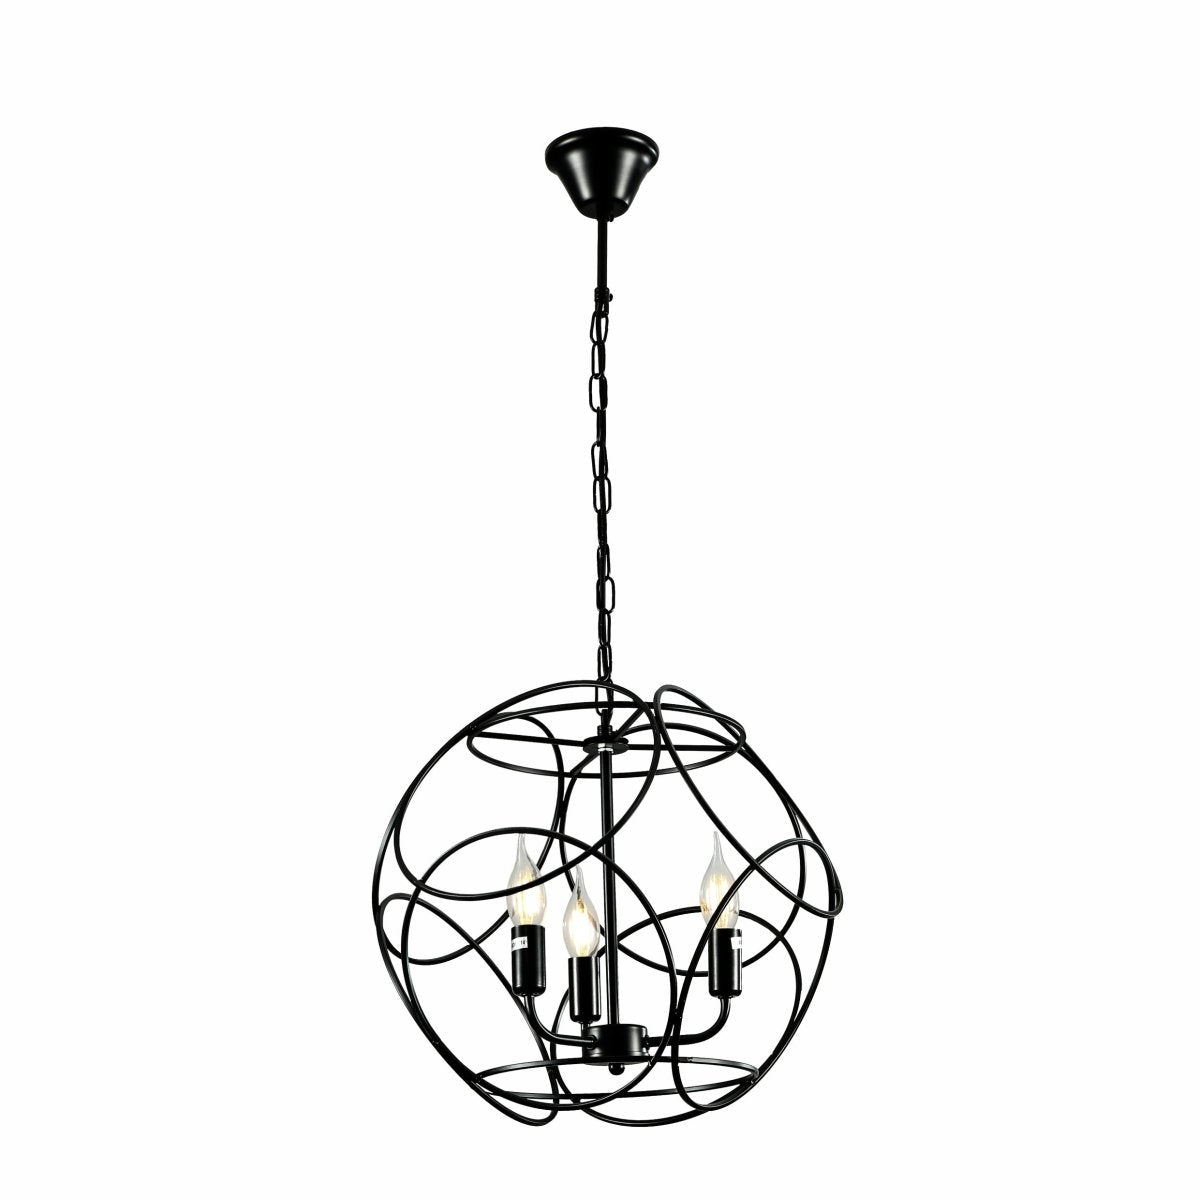 Main image of Black Globe Cage Pendant Chandelier Light with 3xE14 Fittings | TEKLED 159-17446